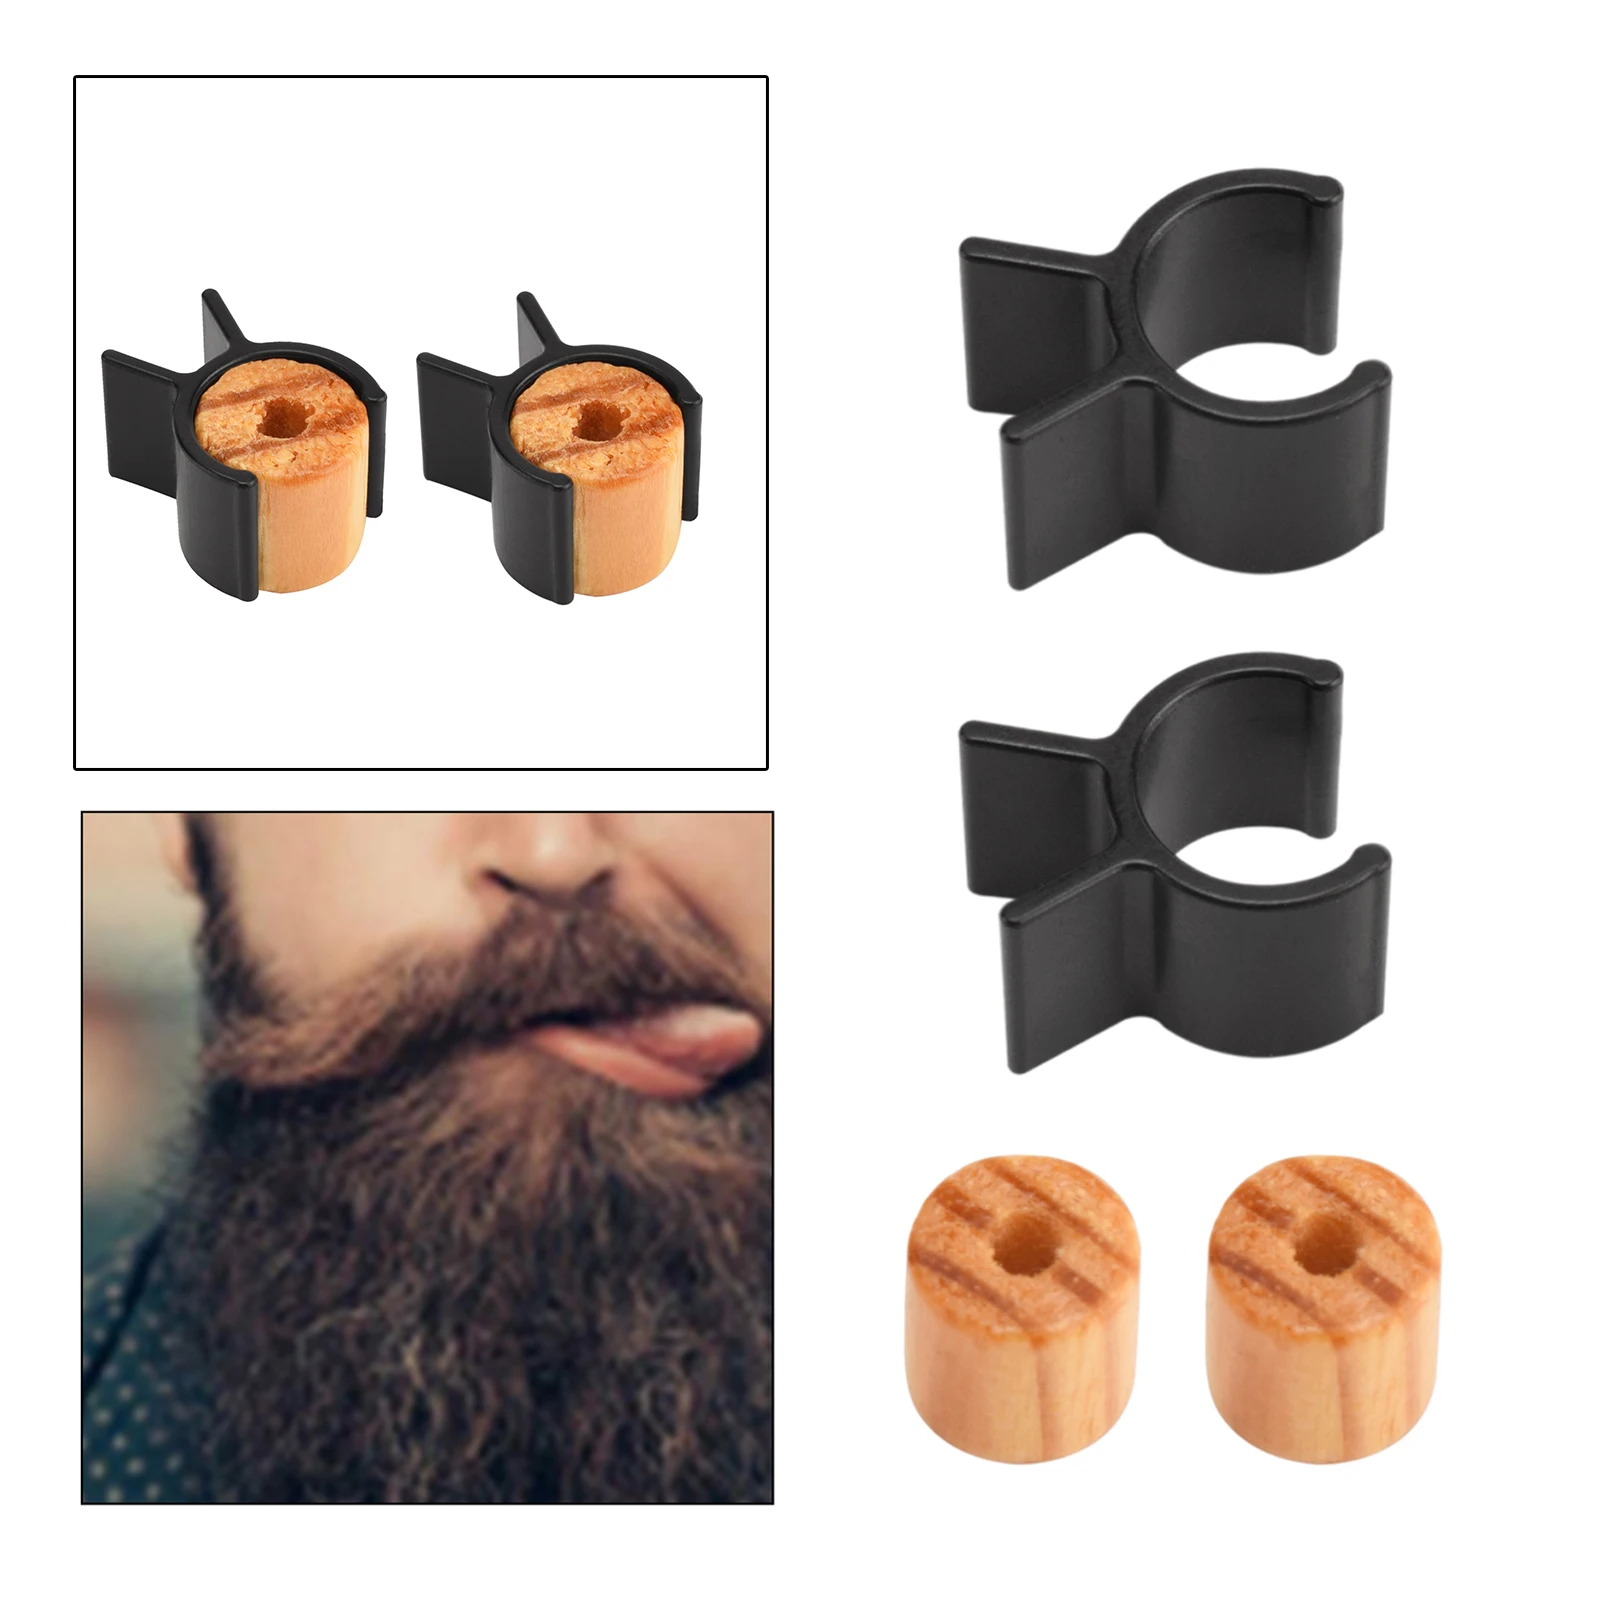 Salon Men Moustache Home Shaping Beard Styling Tools Training Wheel Handle